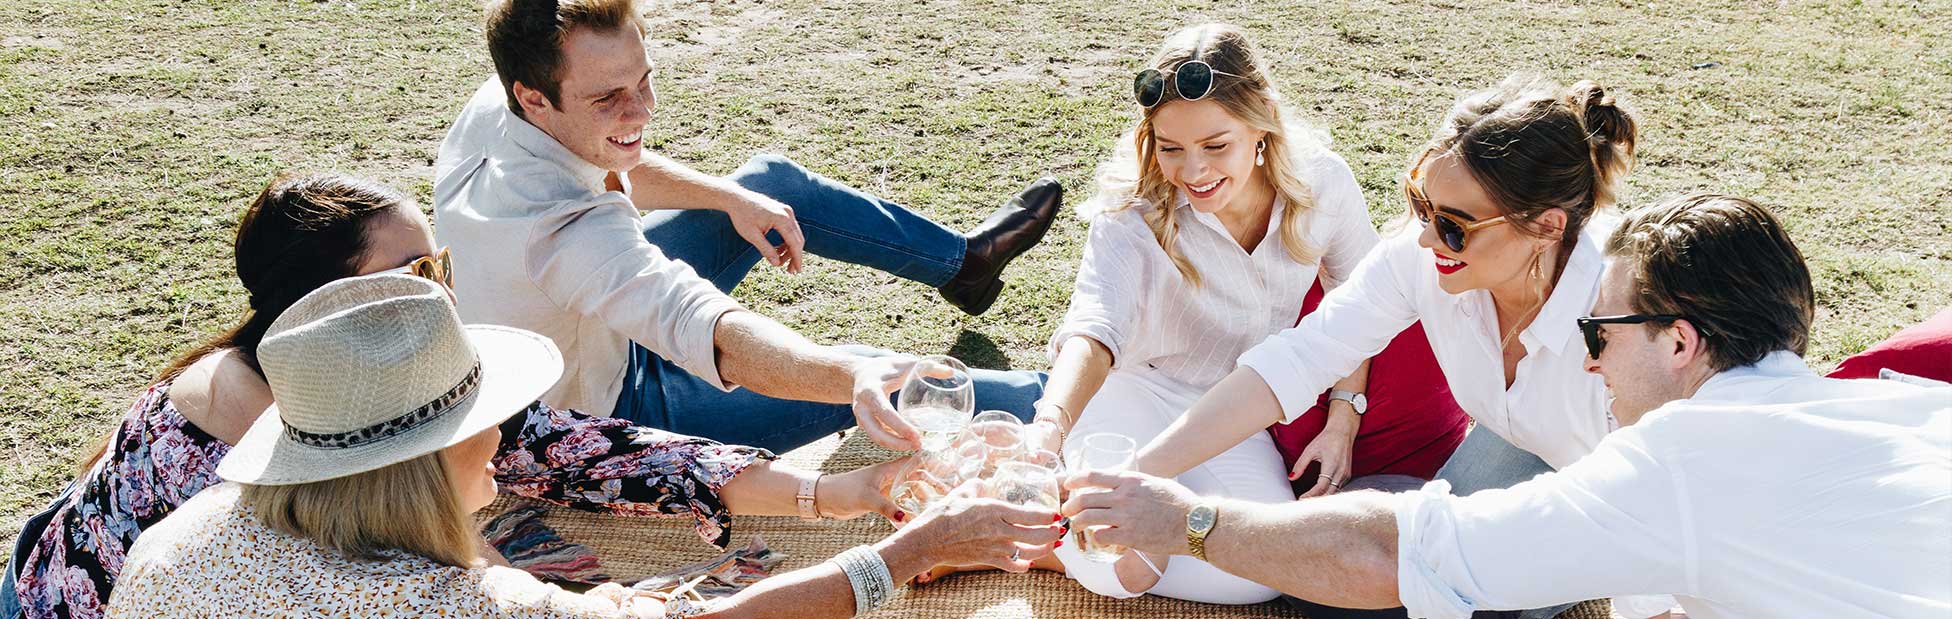 Six happy people having a picnic